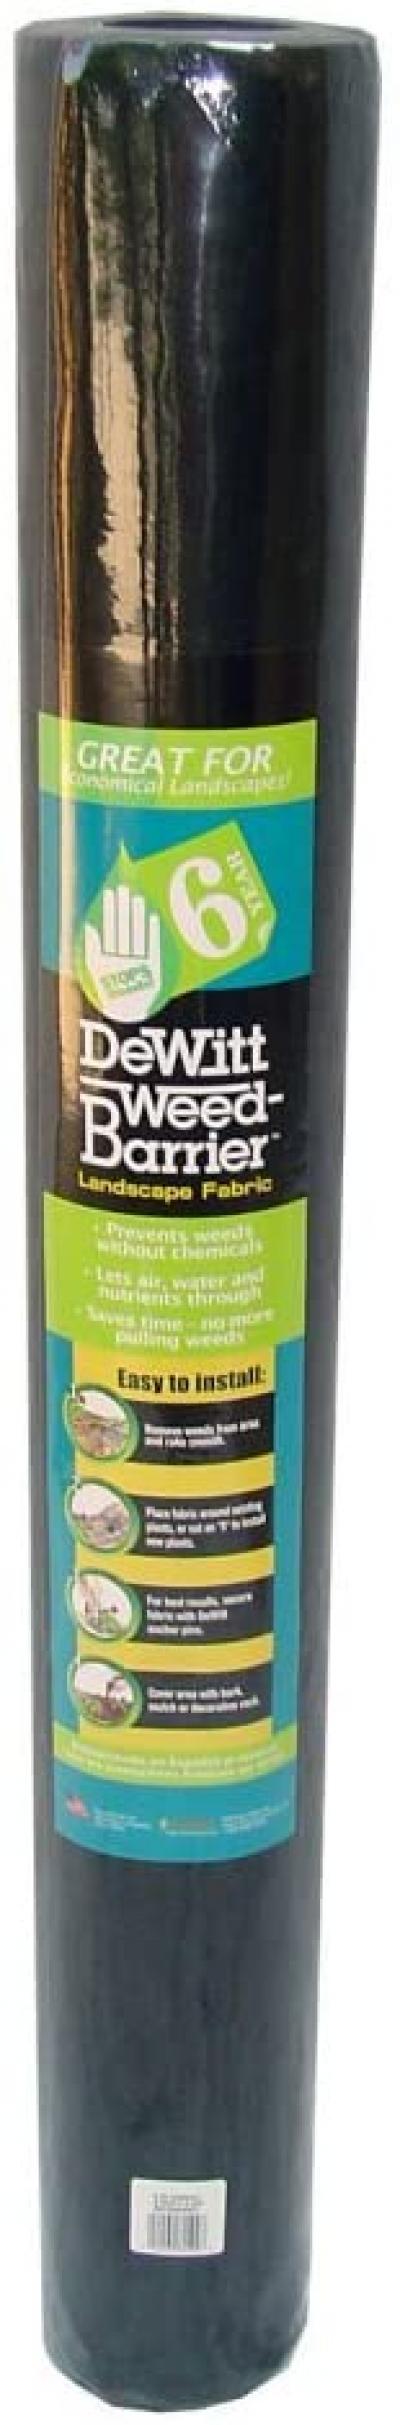 DeWitt 6 Year Weed-Barrier Landscape Fabric 3ft. X 50ft.